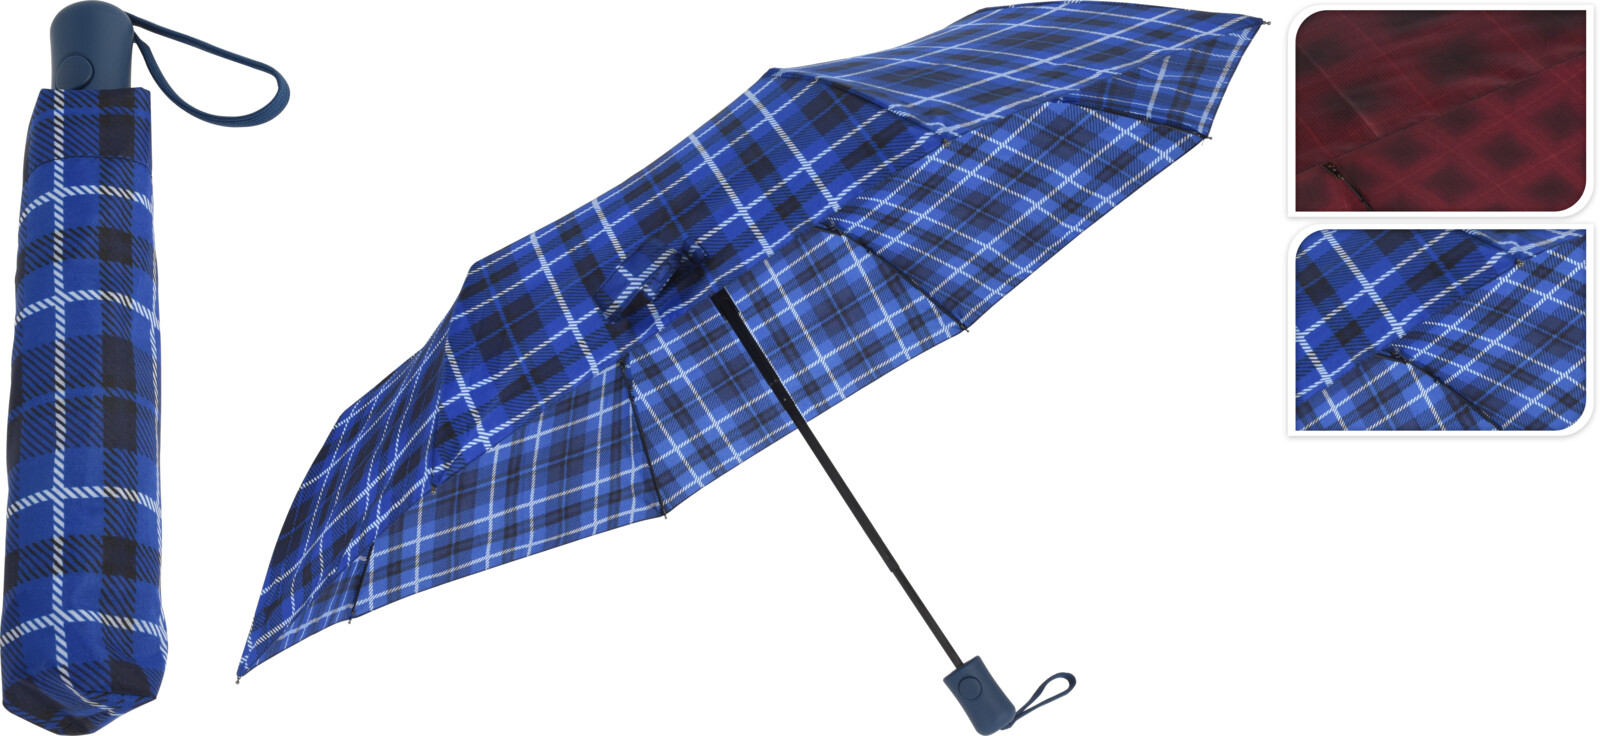 Merkloos Paraplu Vouwbaar Geruit 99x57cm